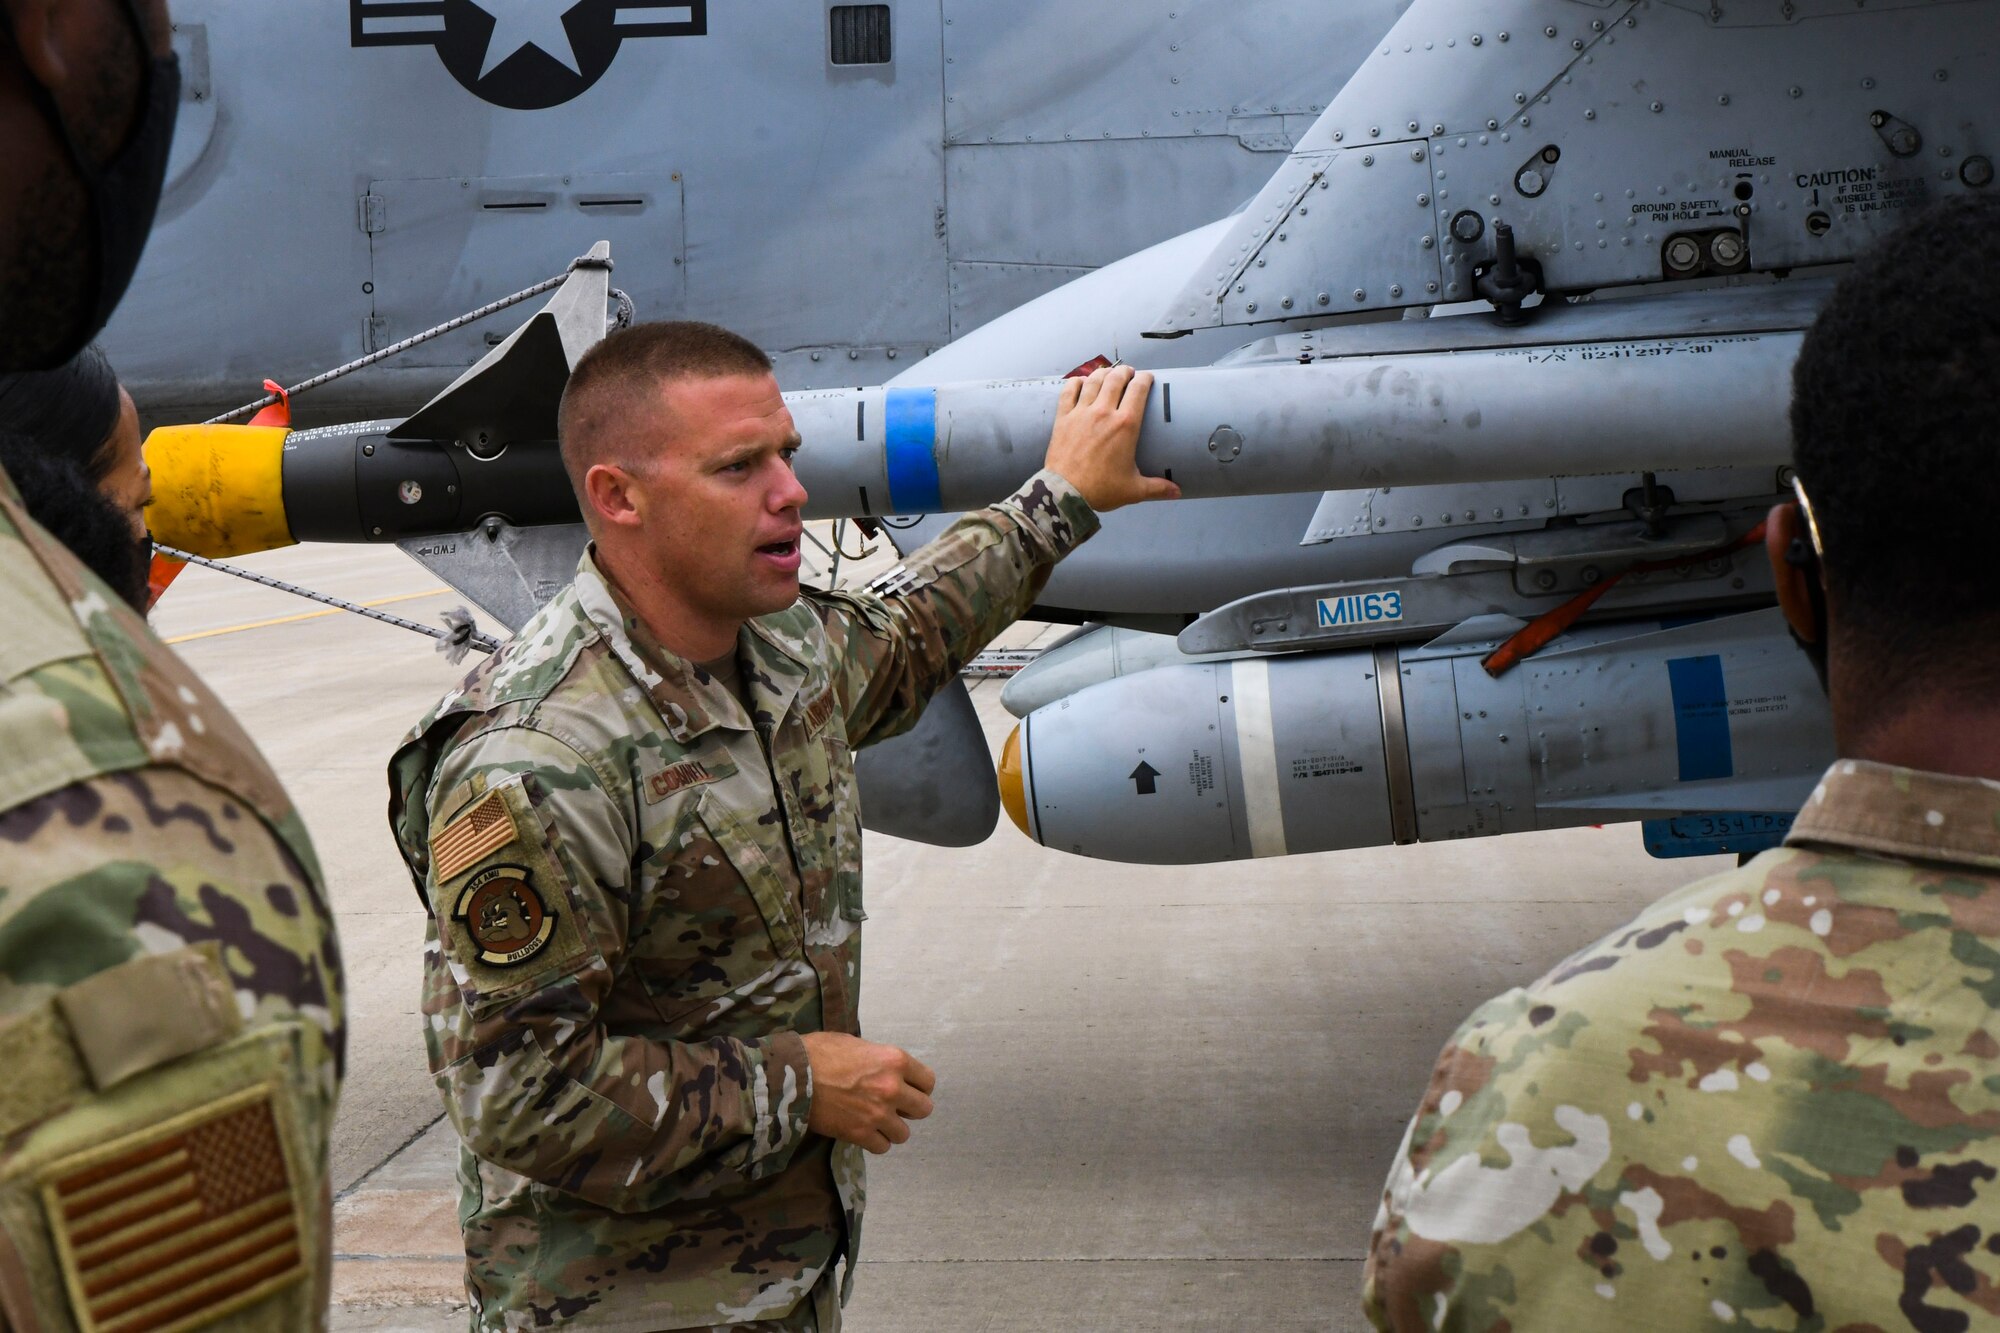 A photo of an airman talking next to a jet